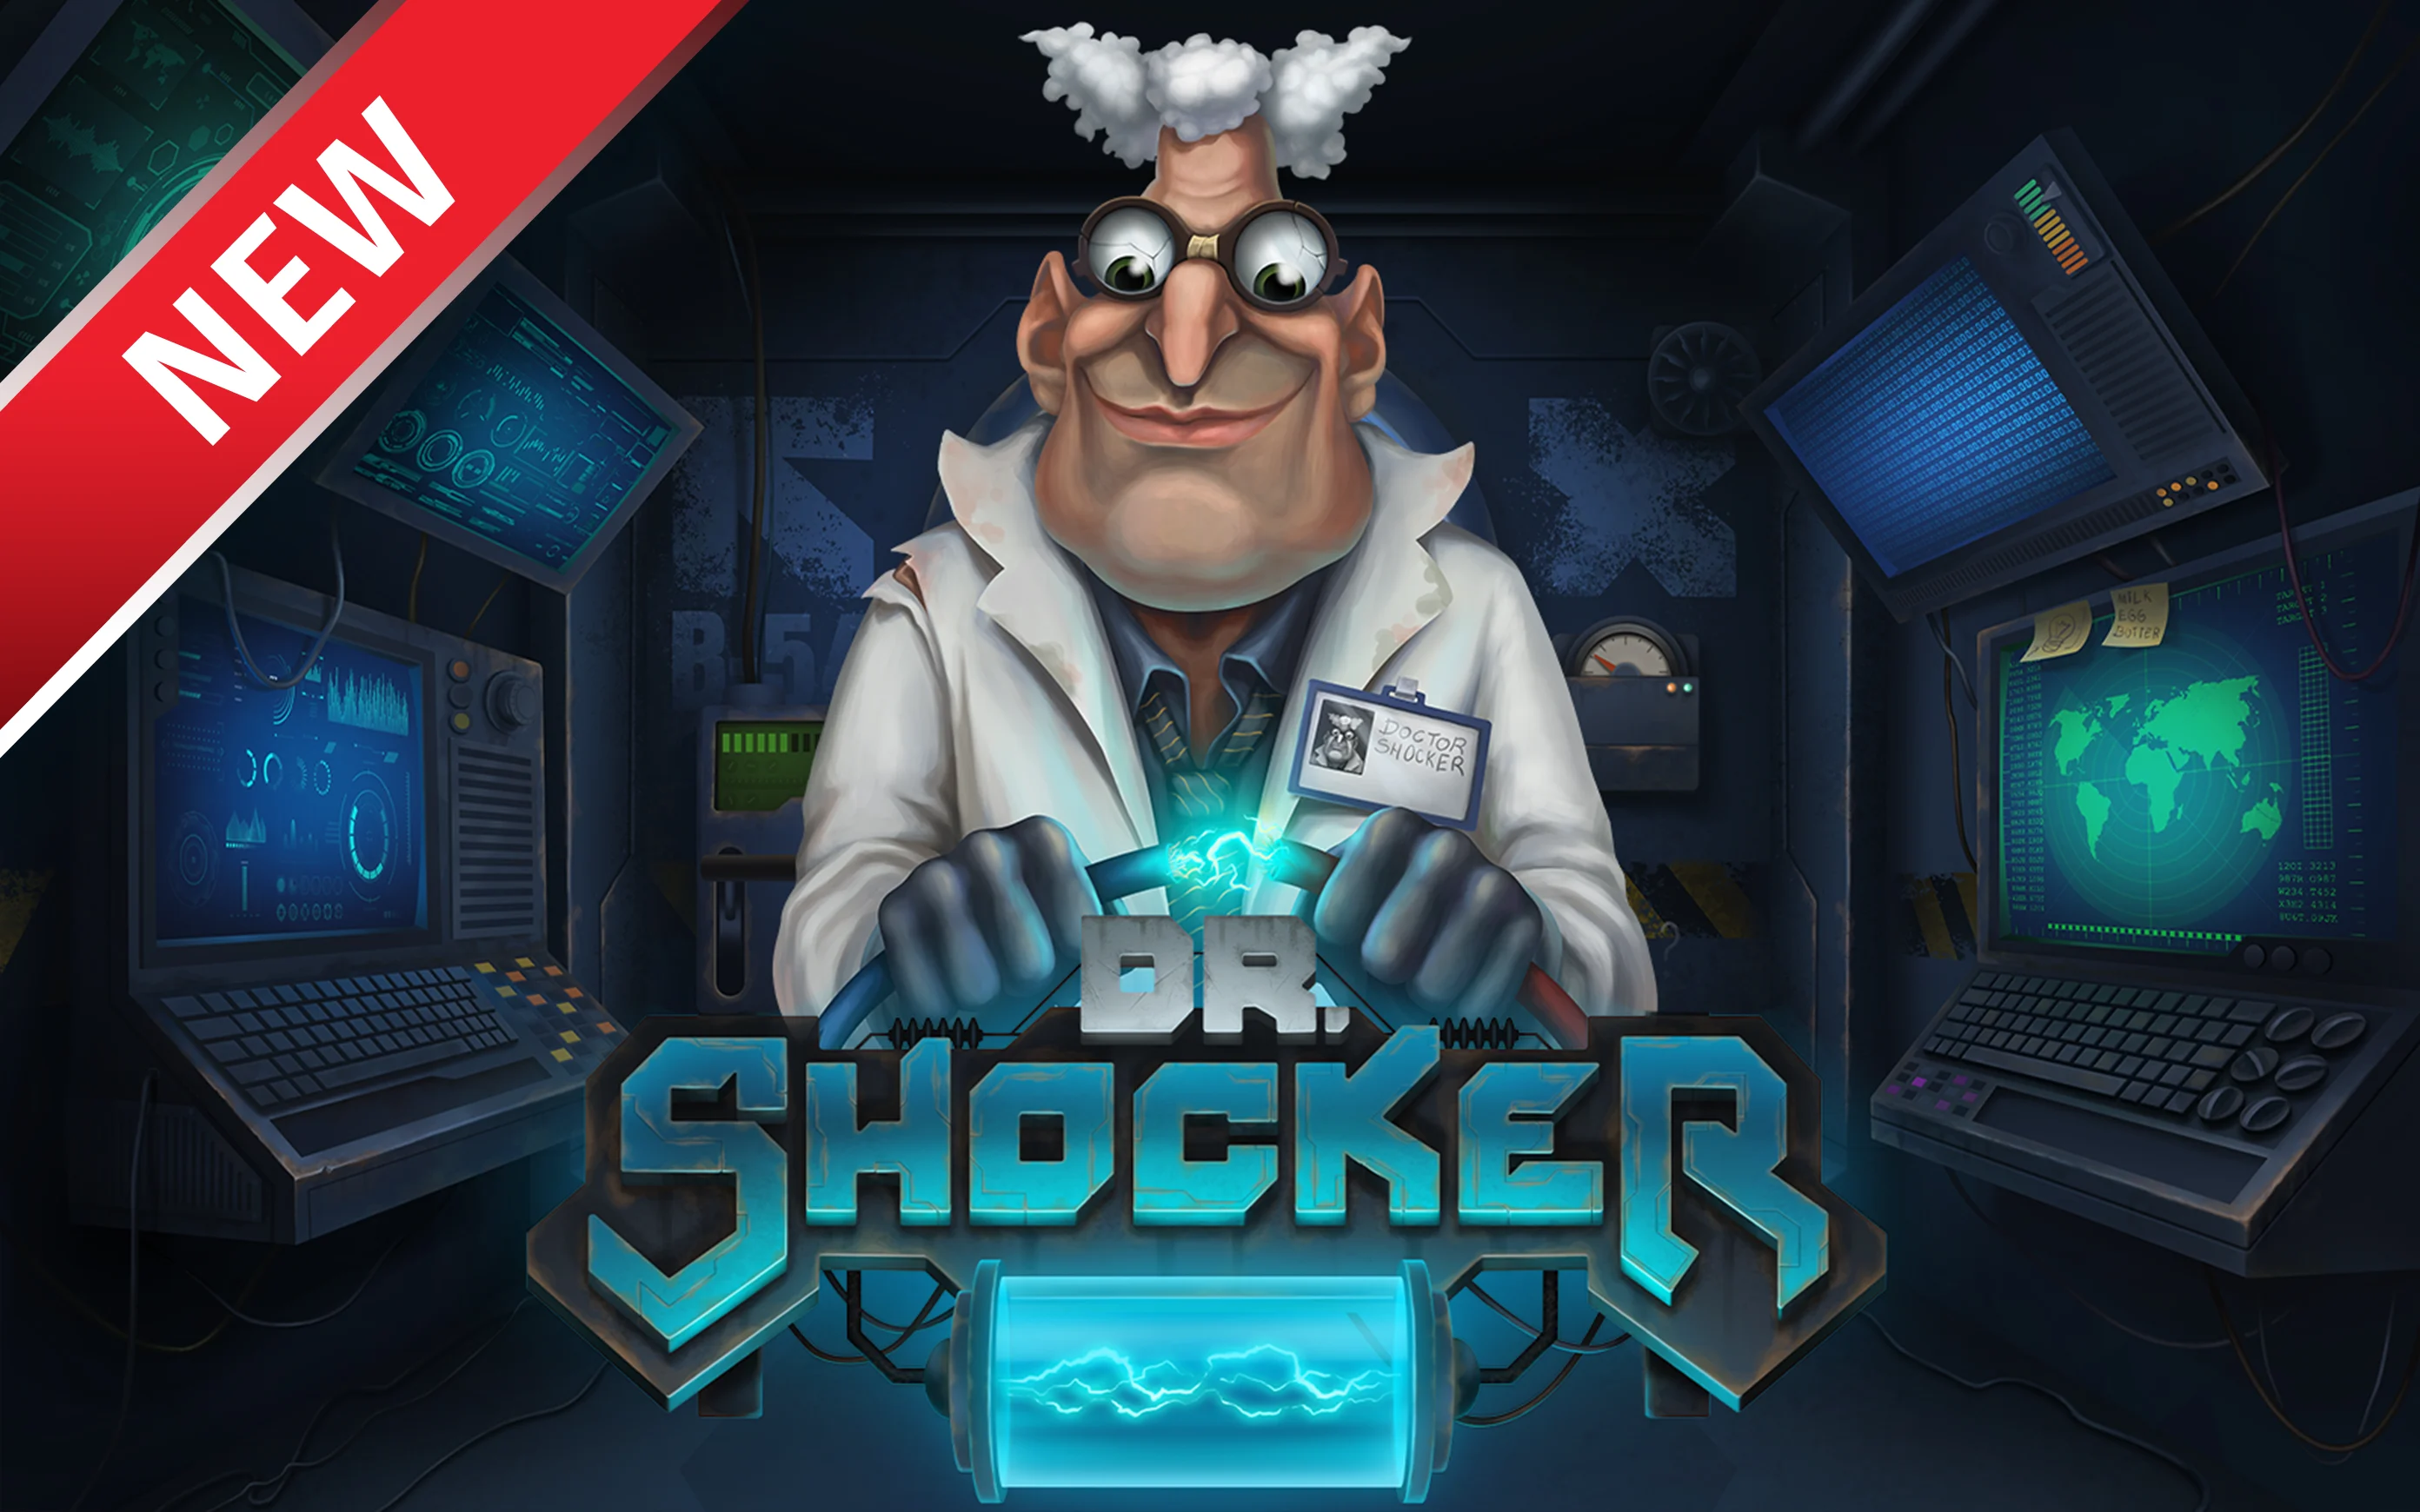 Play Dr. Shocker on Starcasino.be online casino